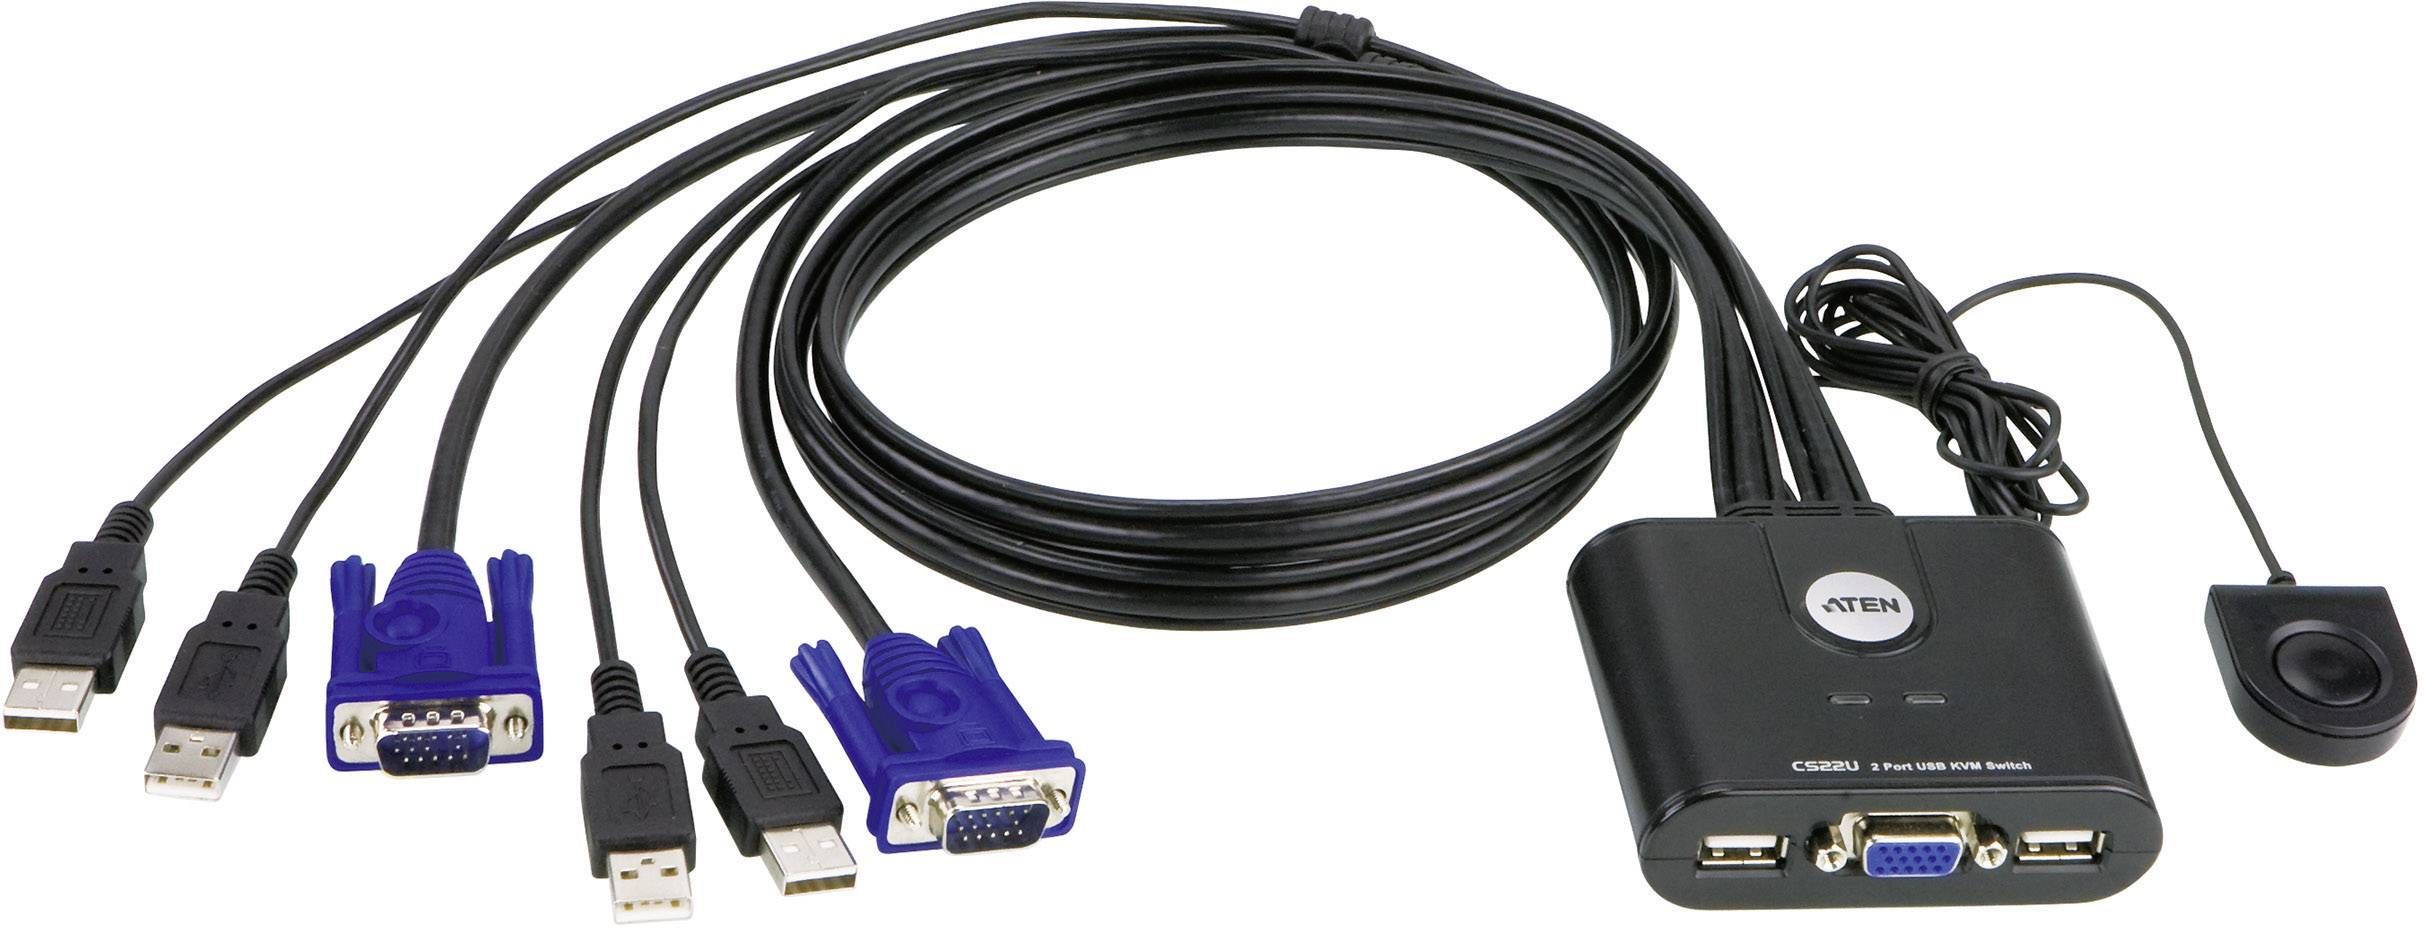 Aten 2-Port USB VGA KVM Switch_1